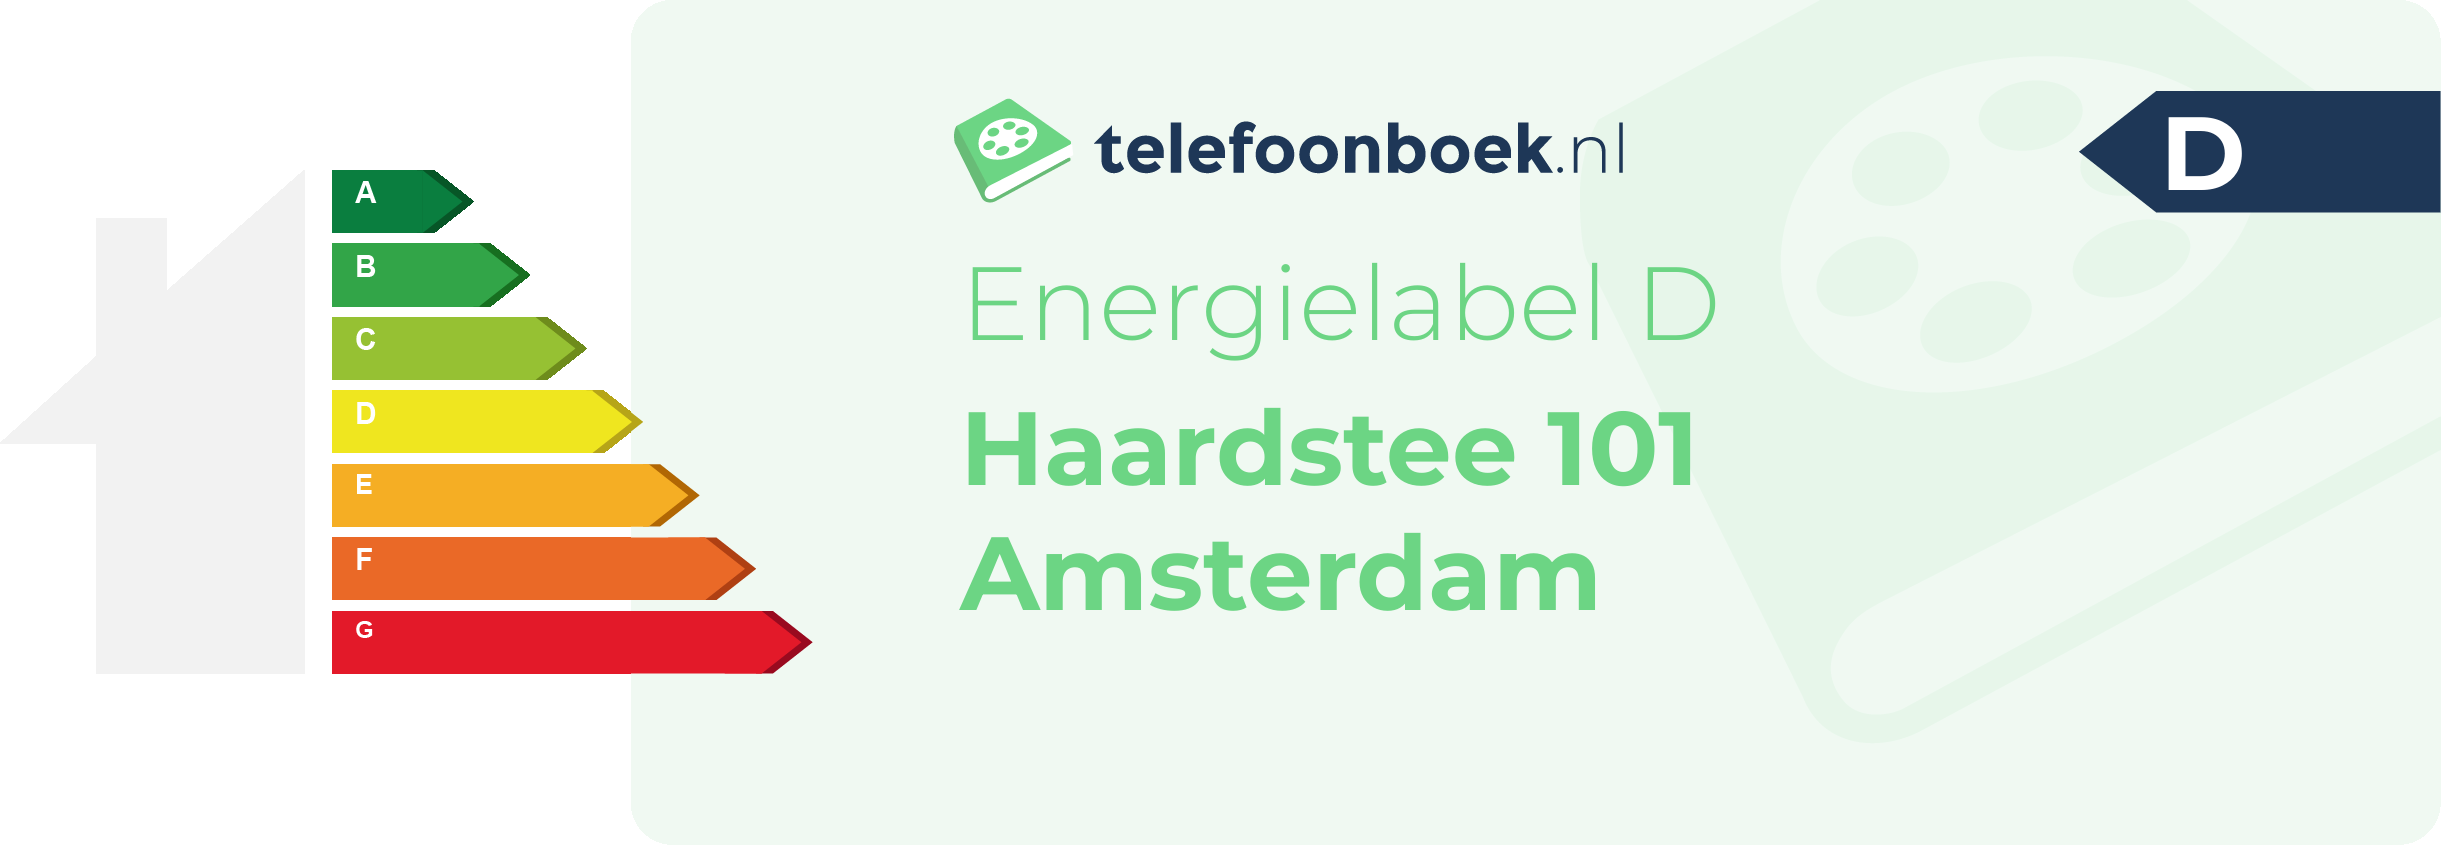 Energielabel Haardstee 101 Amsterdam